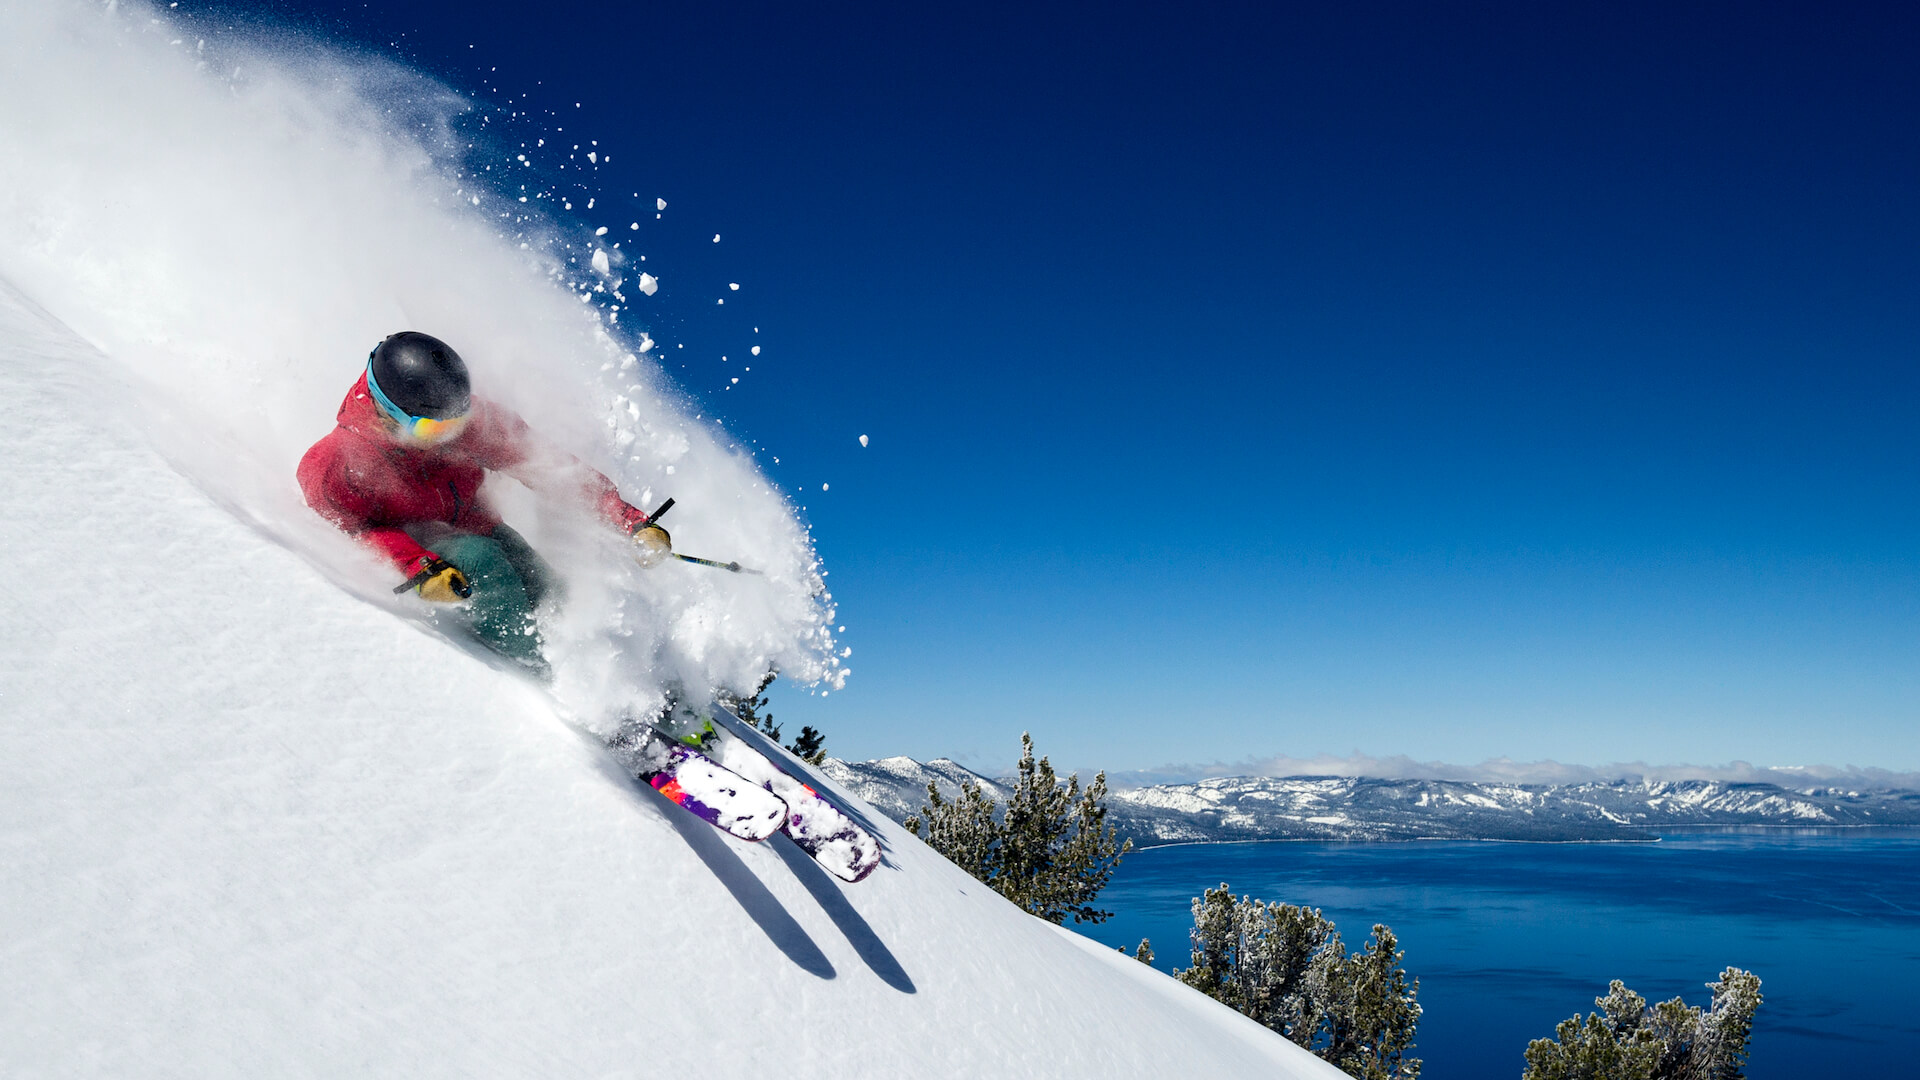 Skiing in deep powder snow on bluebird day at Heavenly Mountain Resort at Lake Tahoe - Rachid Dahnoun / LTVA